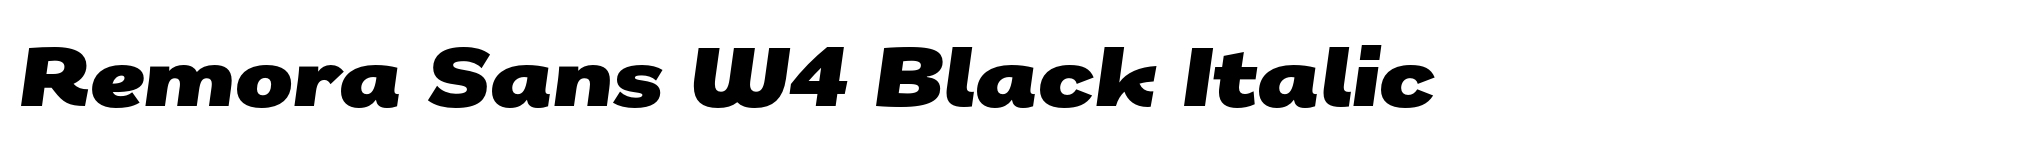 Remora Sans W4 Black Italic image